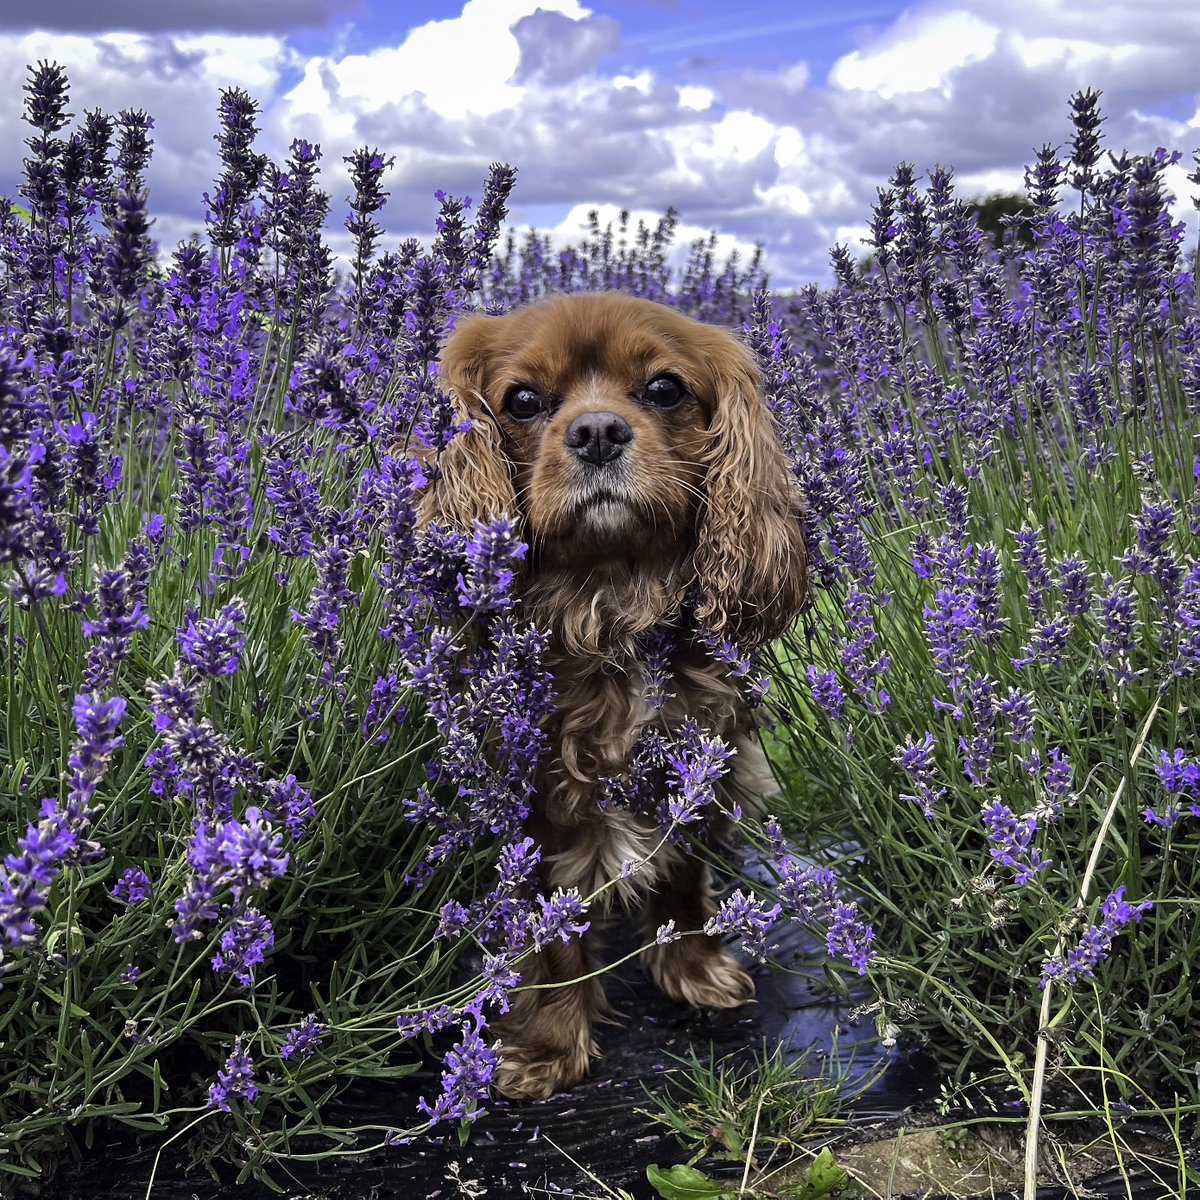 Monty in the Lavender

#warwickshirelavenderfields #appicoftheweek #jessopsmoment #dogs @TelegraphPics #bbcmtd #kingcharlesspaniel #ThePhotoHour